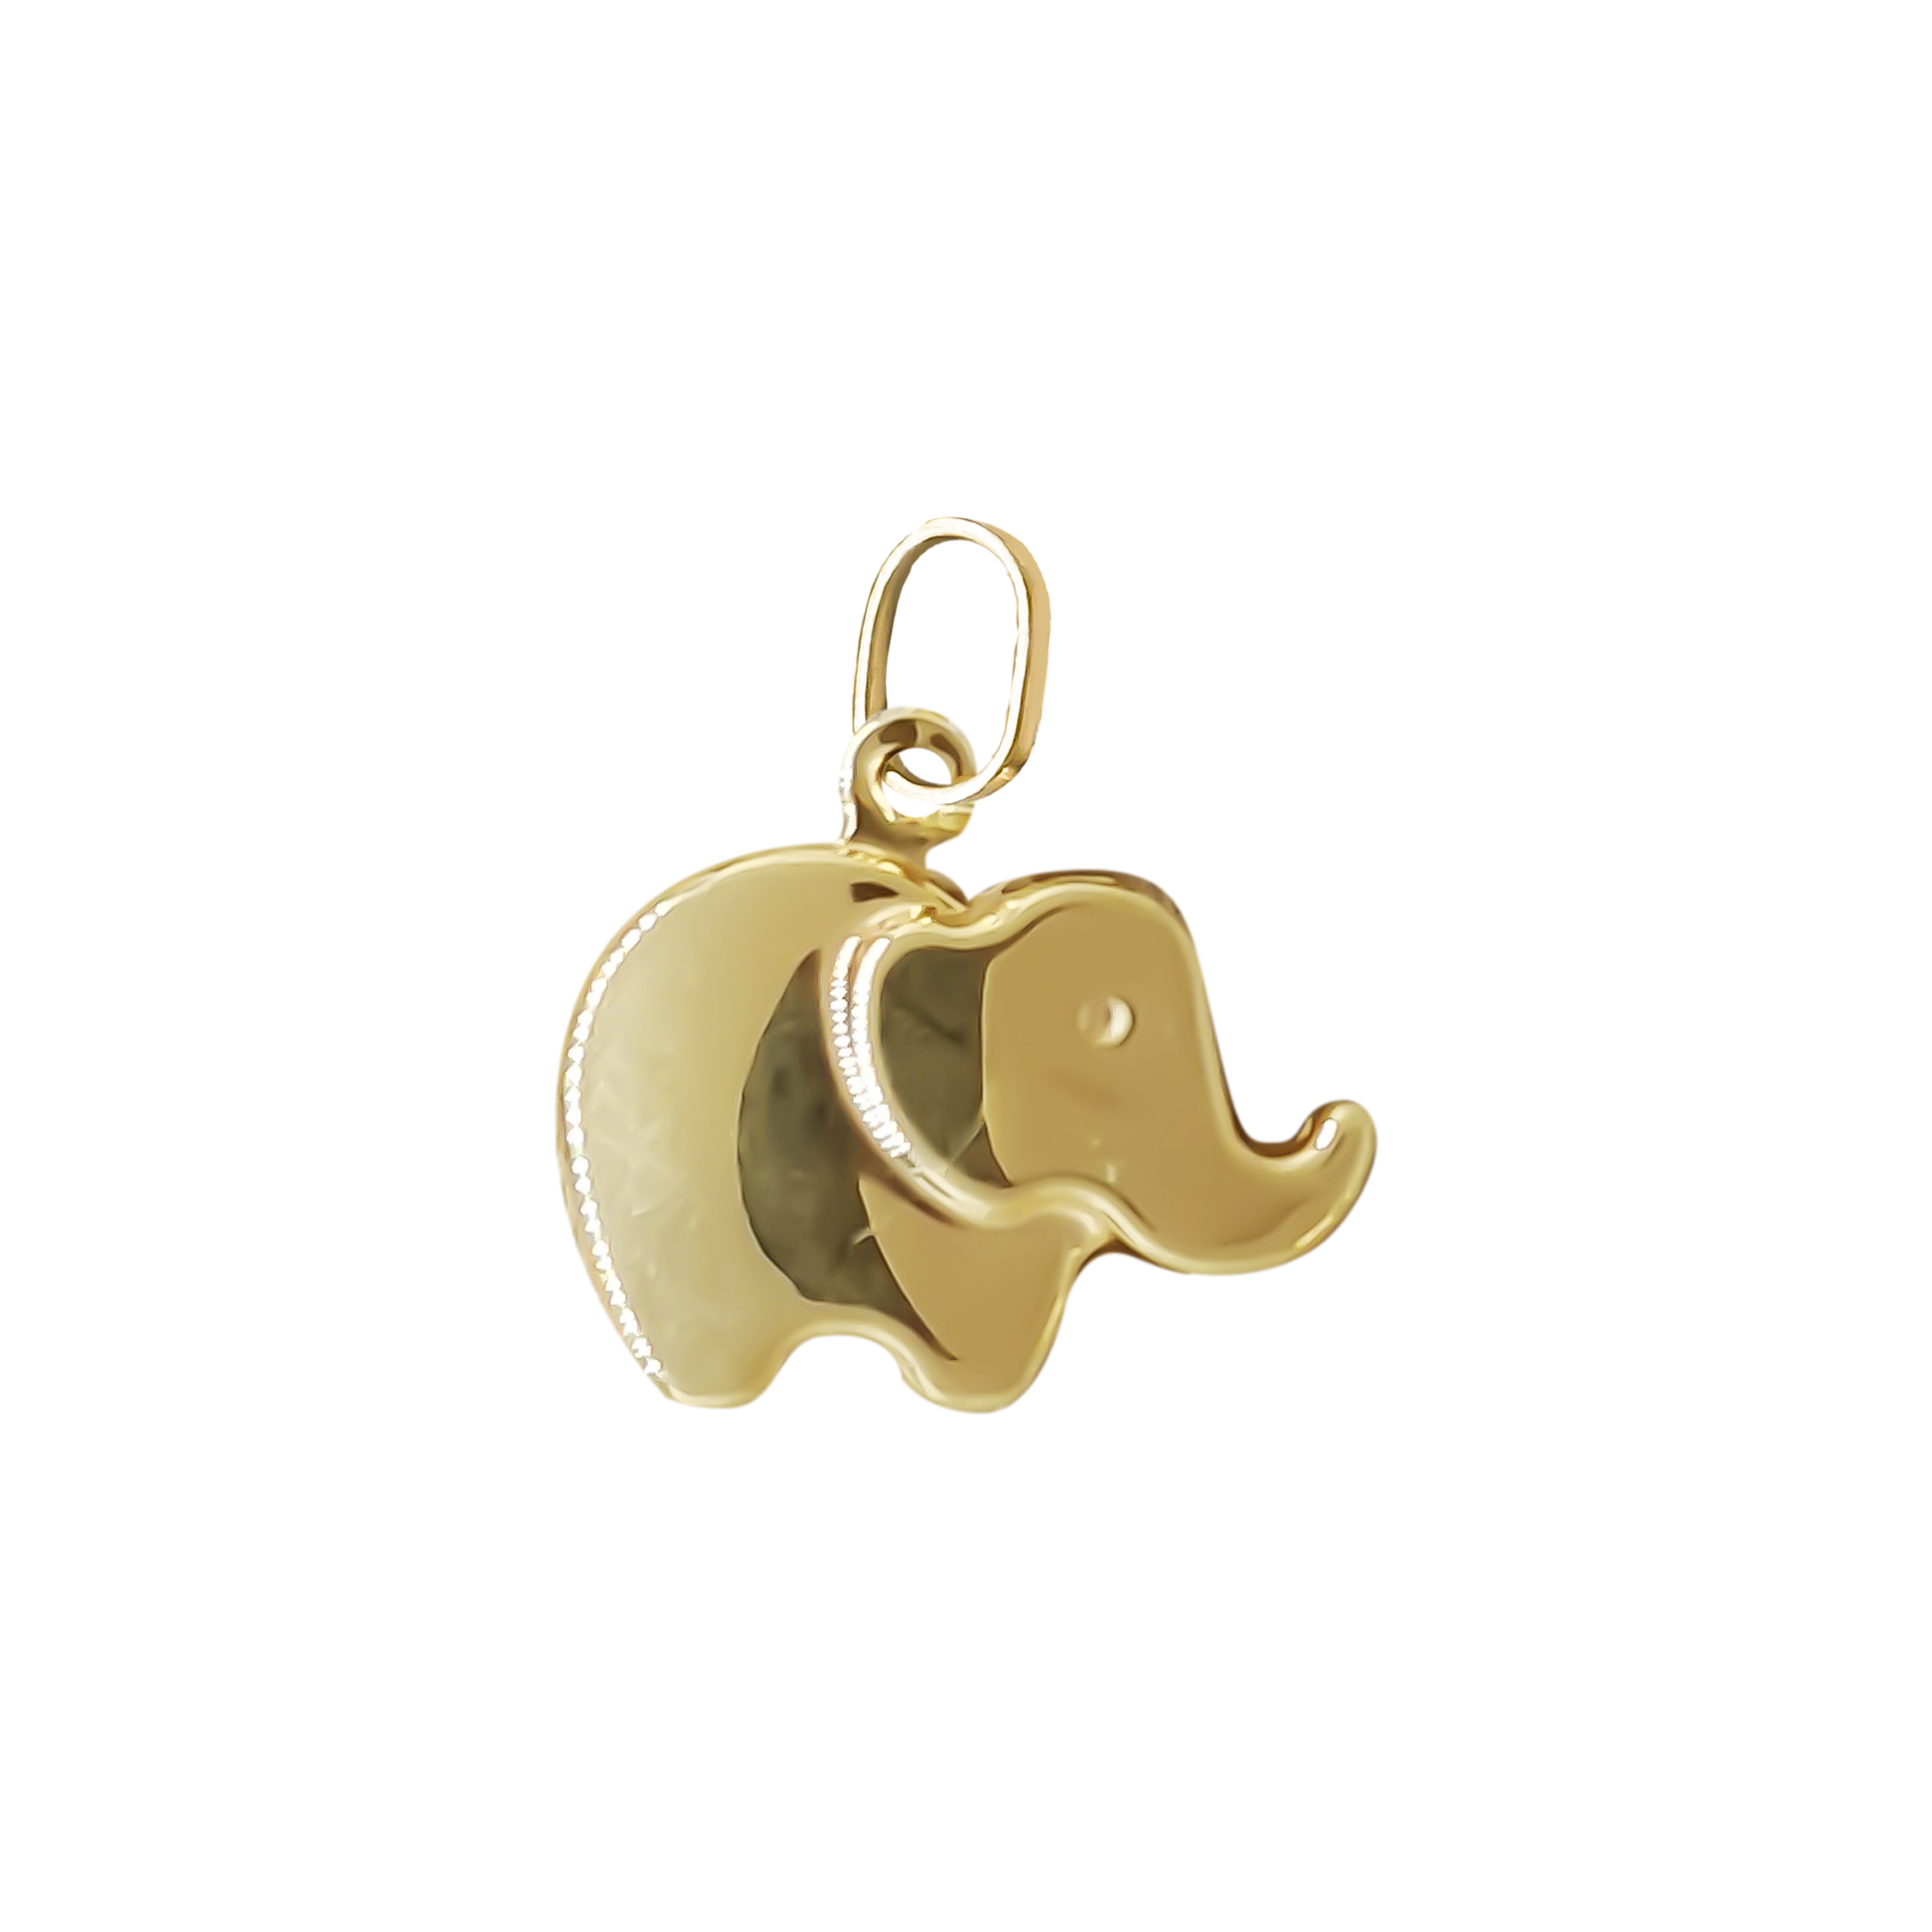 11mm Elephant Charm 9ct Yellow Gold